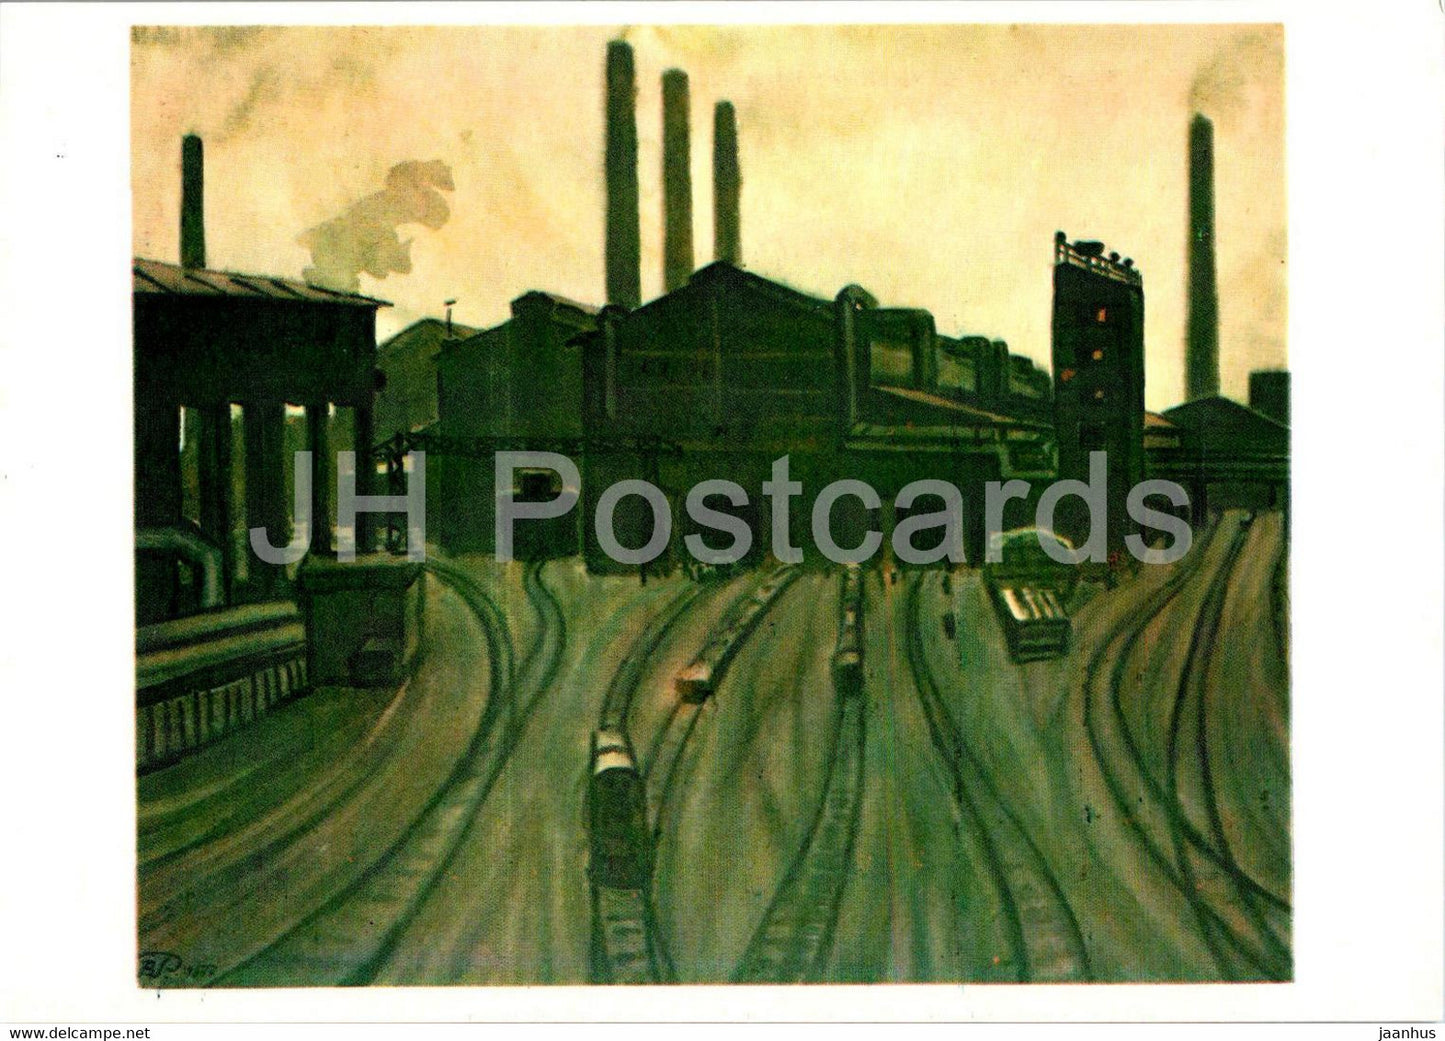 painting by V. Rogachev - Sverdlovsk Verkh-Iset metallurgical plant - Urals - Russian art - 1984 - Russia USSR - unused - JH Postcards